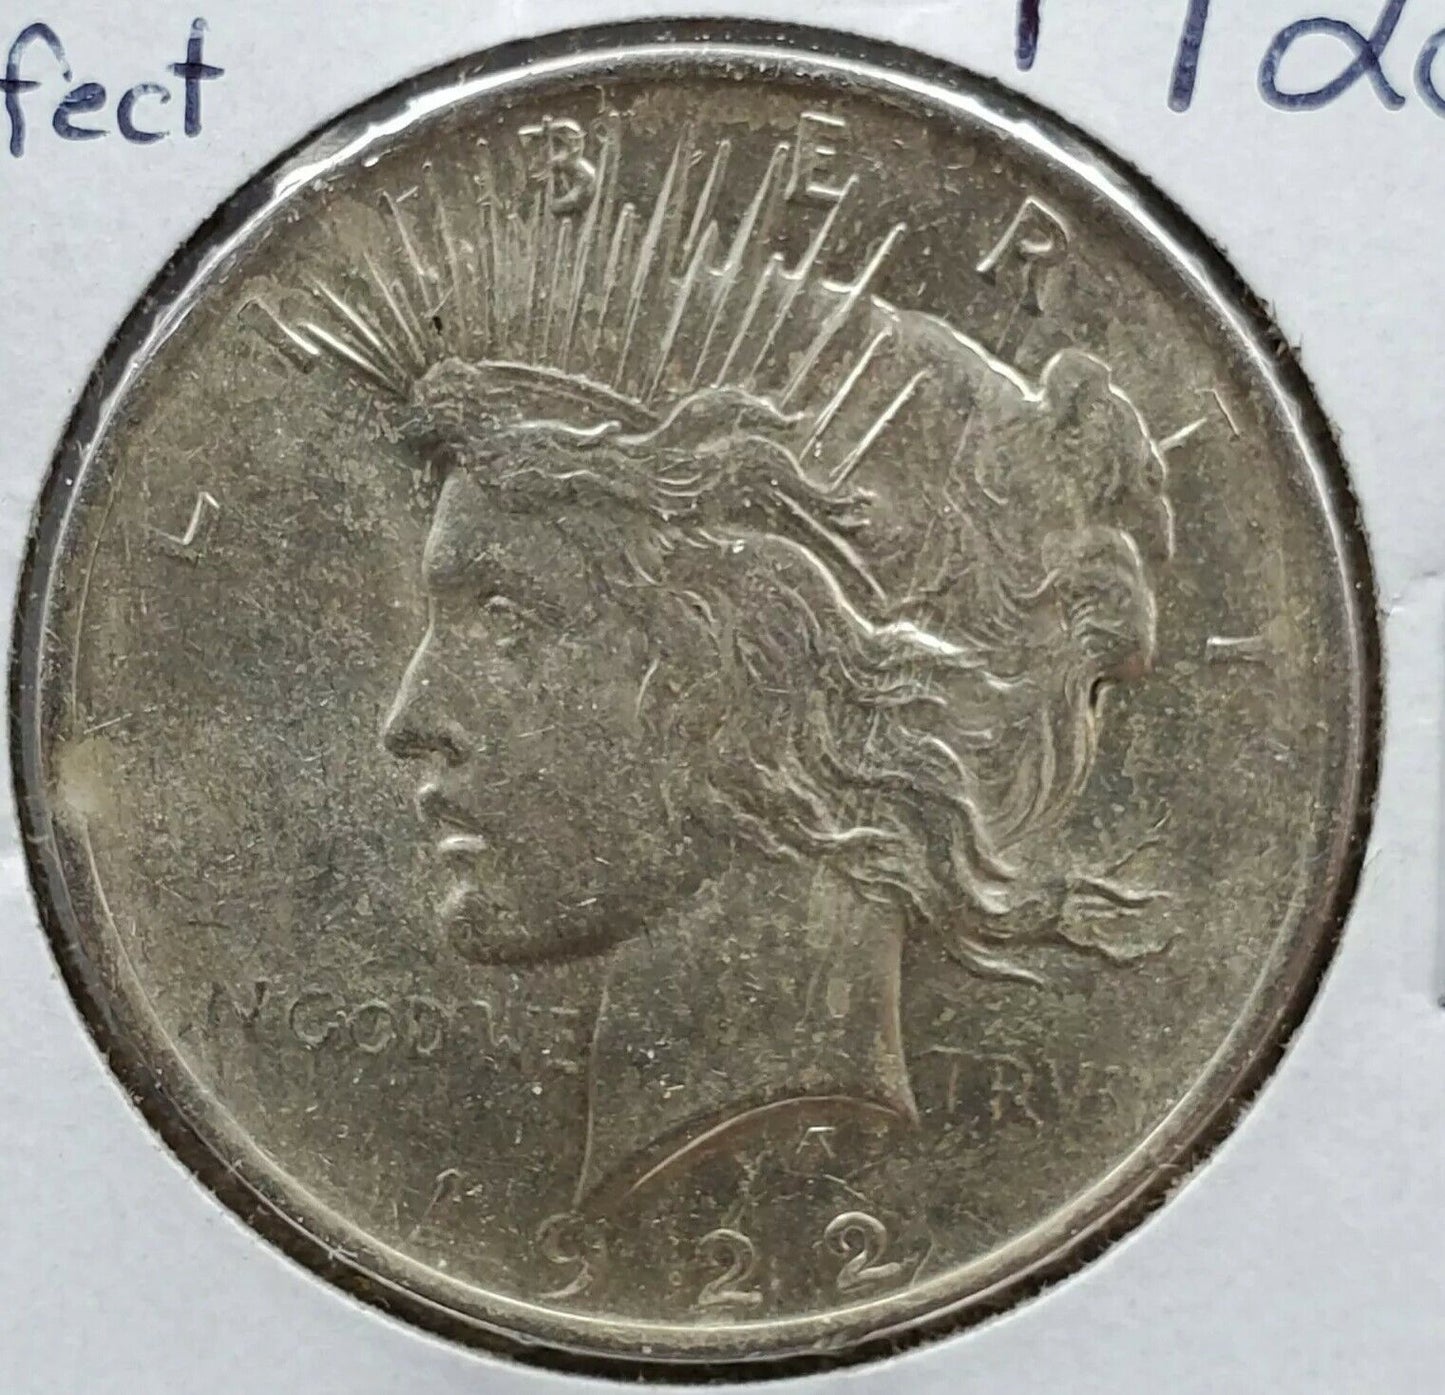 1922 P $1 Peace Silver Eagle Dollar Coin Reverse Planchet Defect Error VF Detail